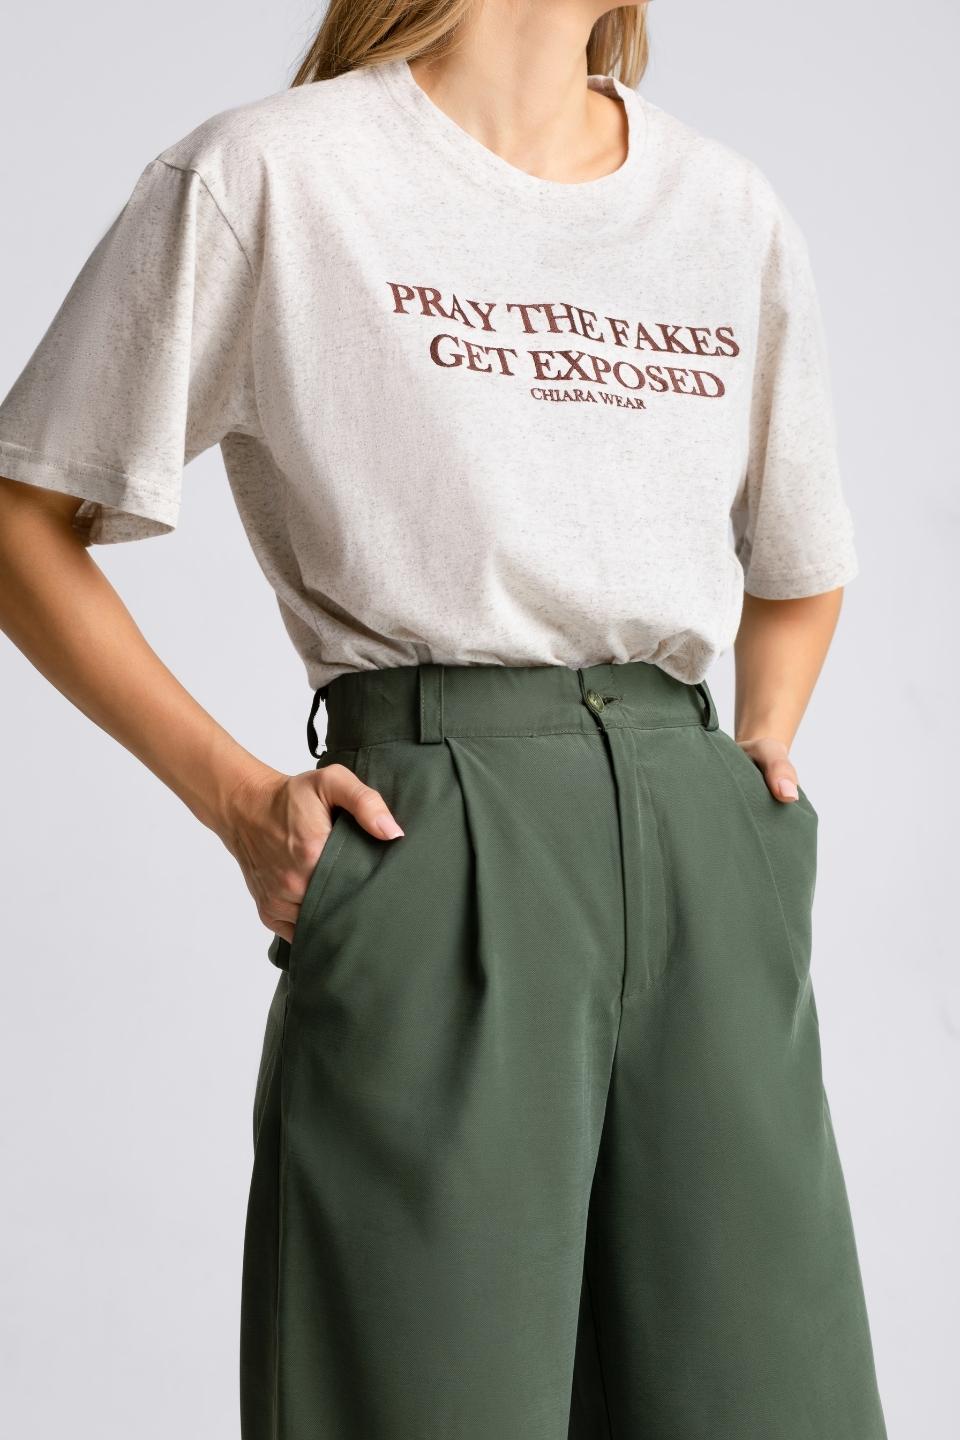 T-shirt damski oversize PRAY - konopia - Chiara Wear